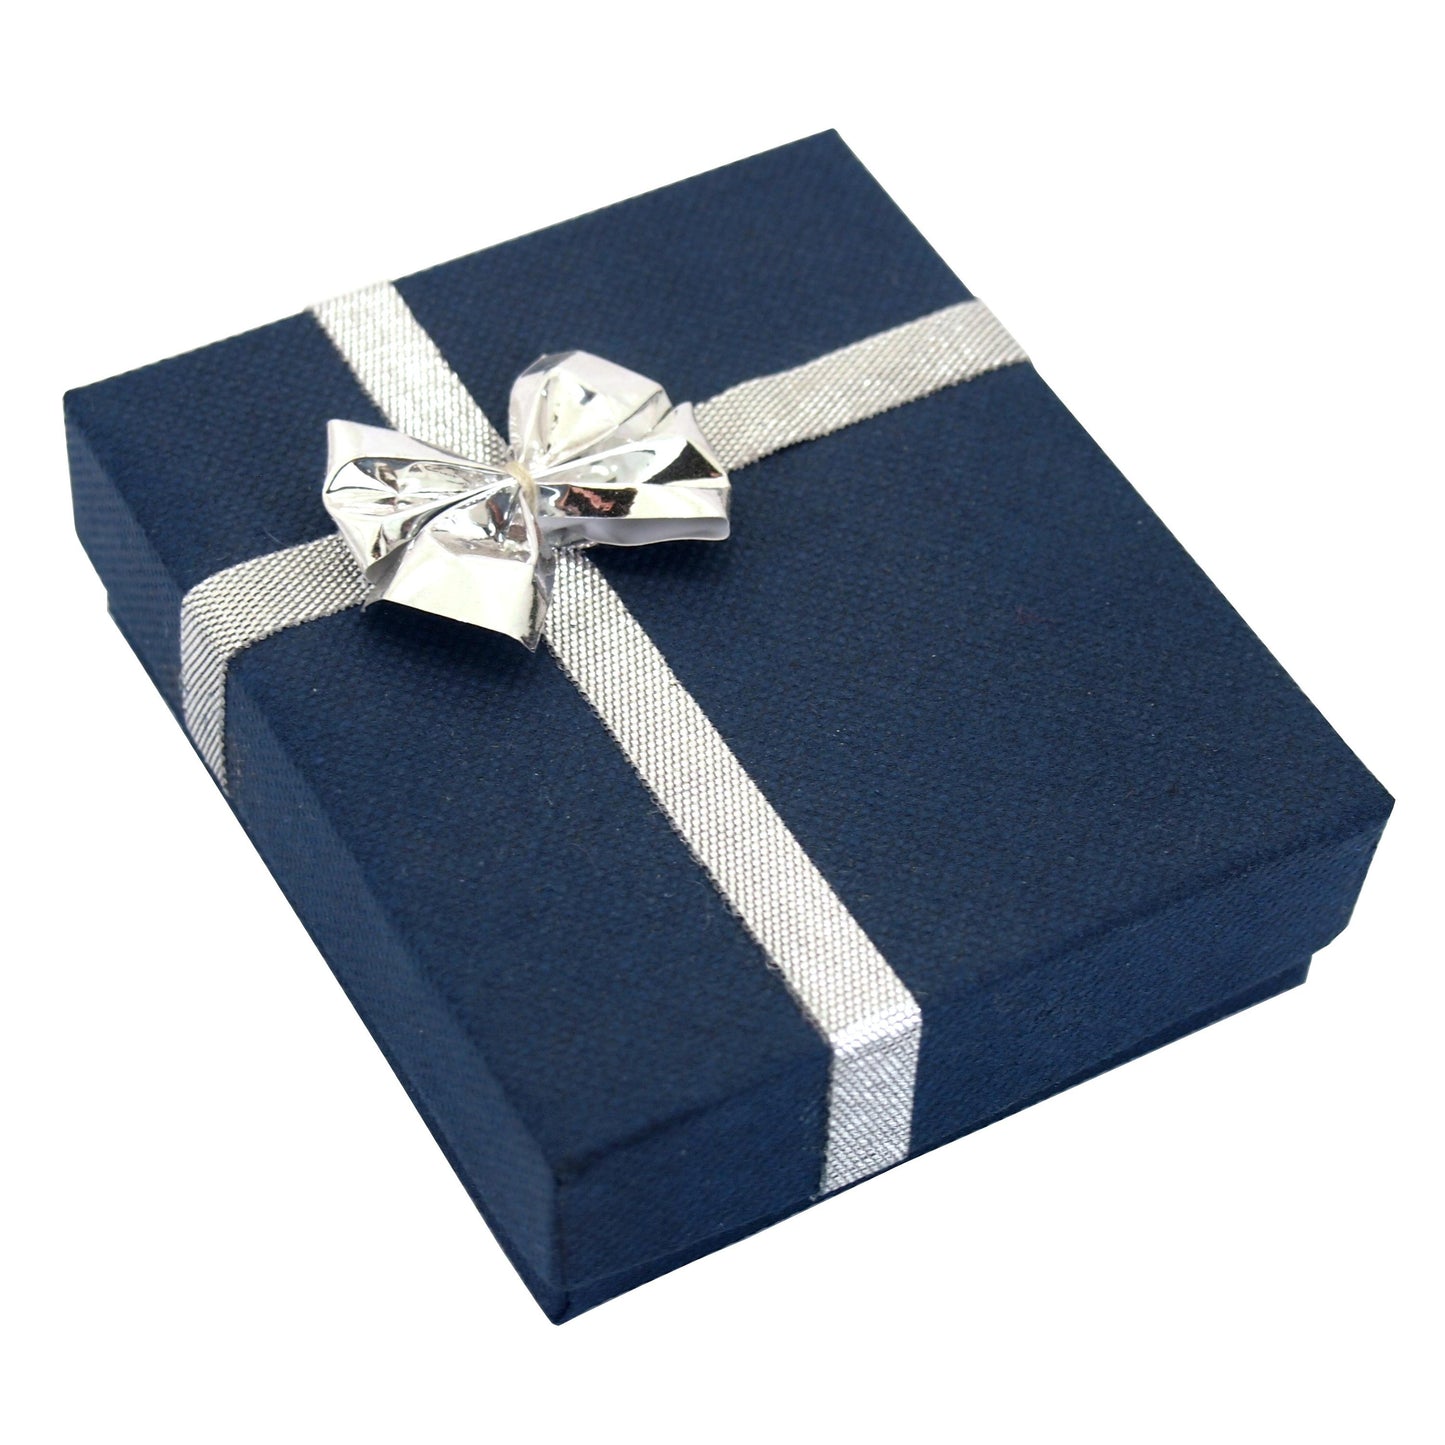 Blue Bow-Tie Jewelry Gift Box Pendant Earrings Showcase Display